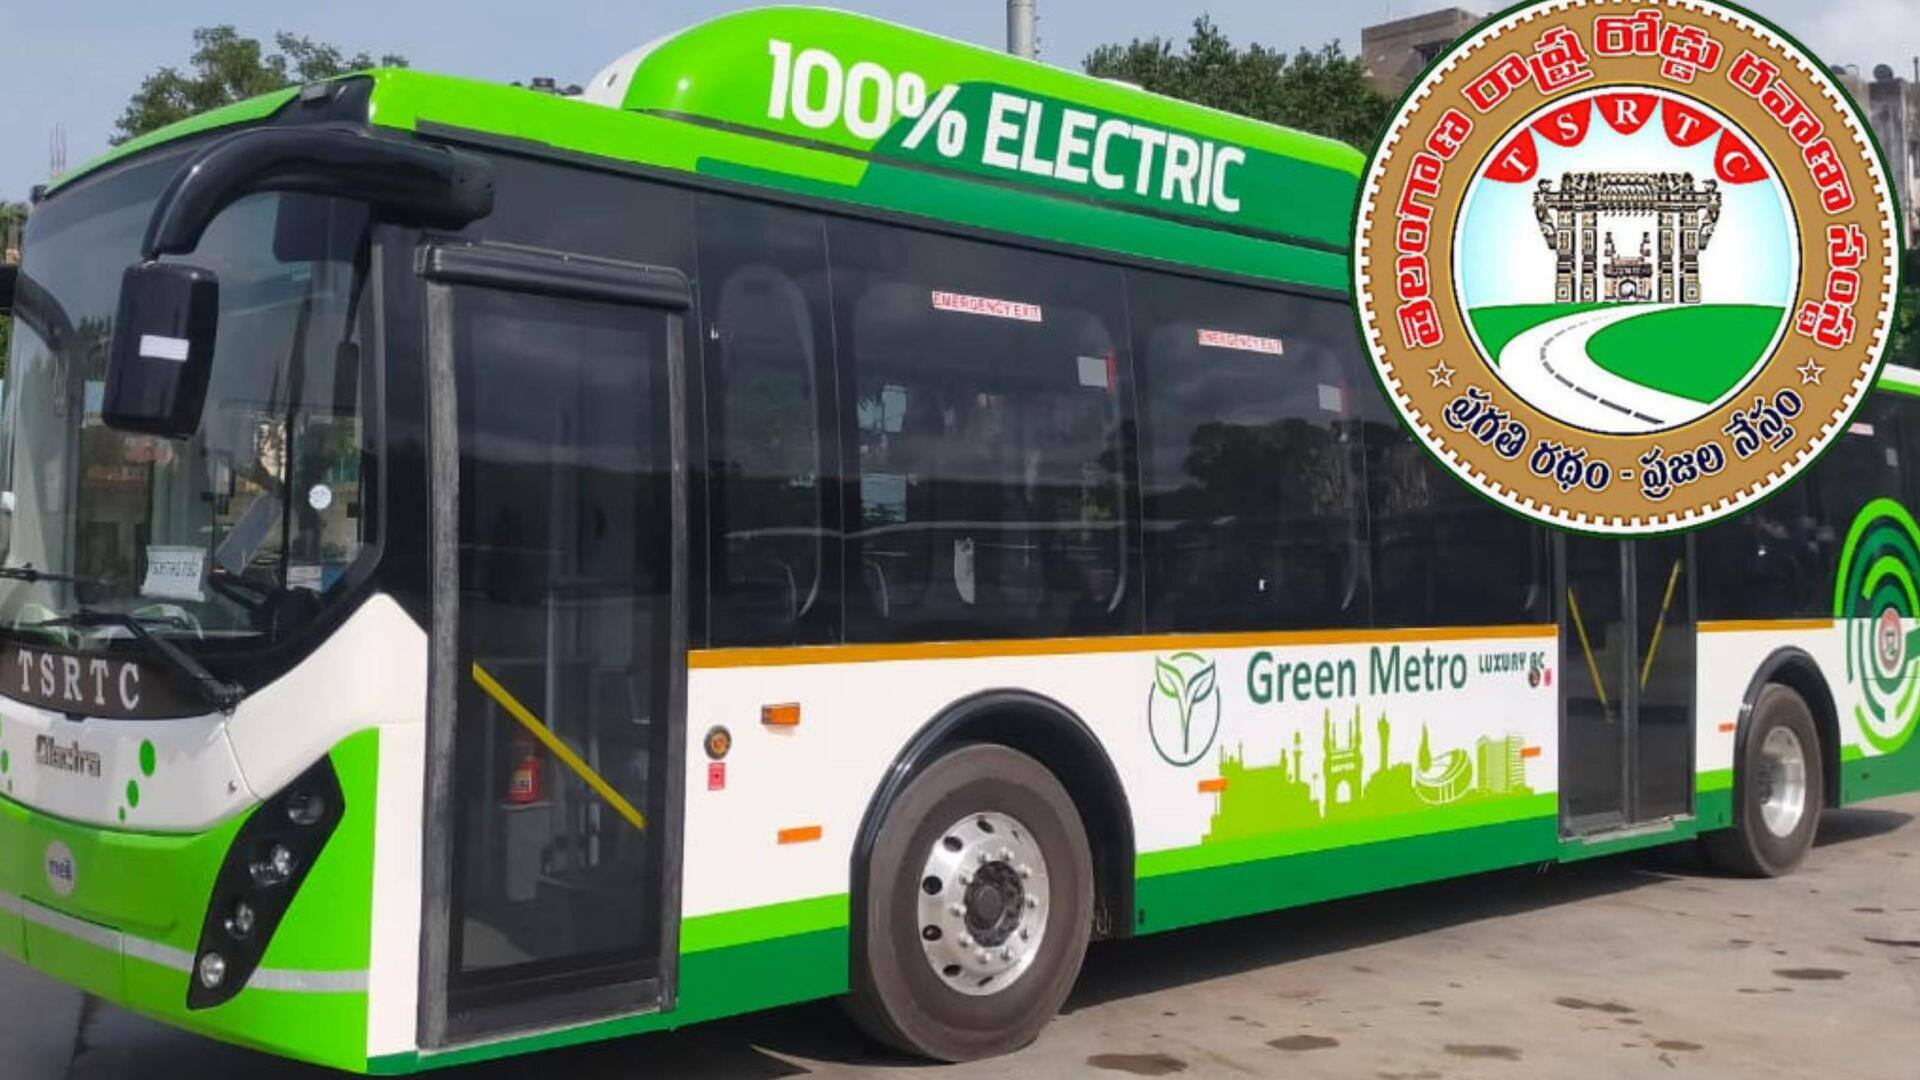 Green Metro buses: హైదరాబాద్‌లో ఆర్టీసీ ప్రయాణికుల కోసం 'గ్రీన్‌ మెట్రో లగ్జరీ' ఏసీ బస్సులు 